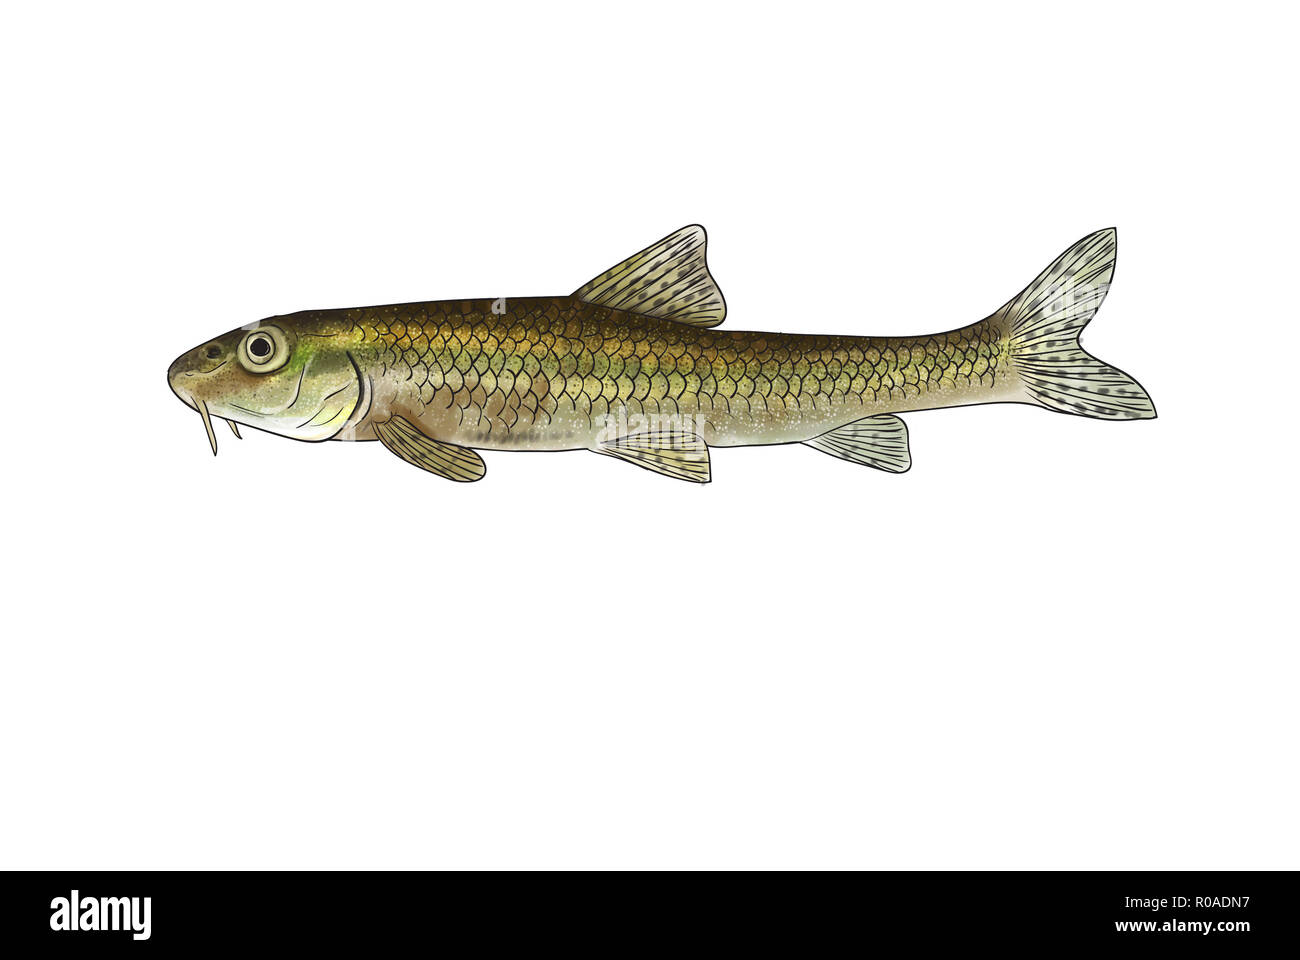 Digital illustration of freshwater fish,gudgeon Stock Photo